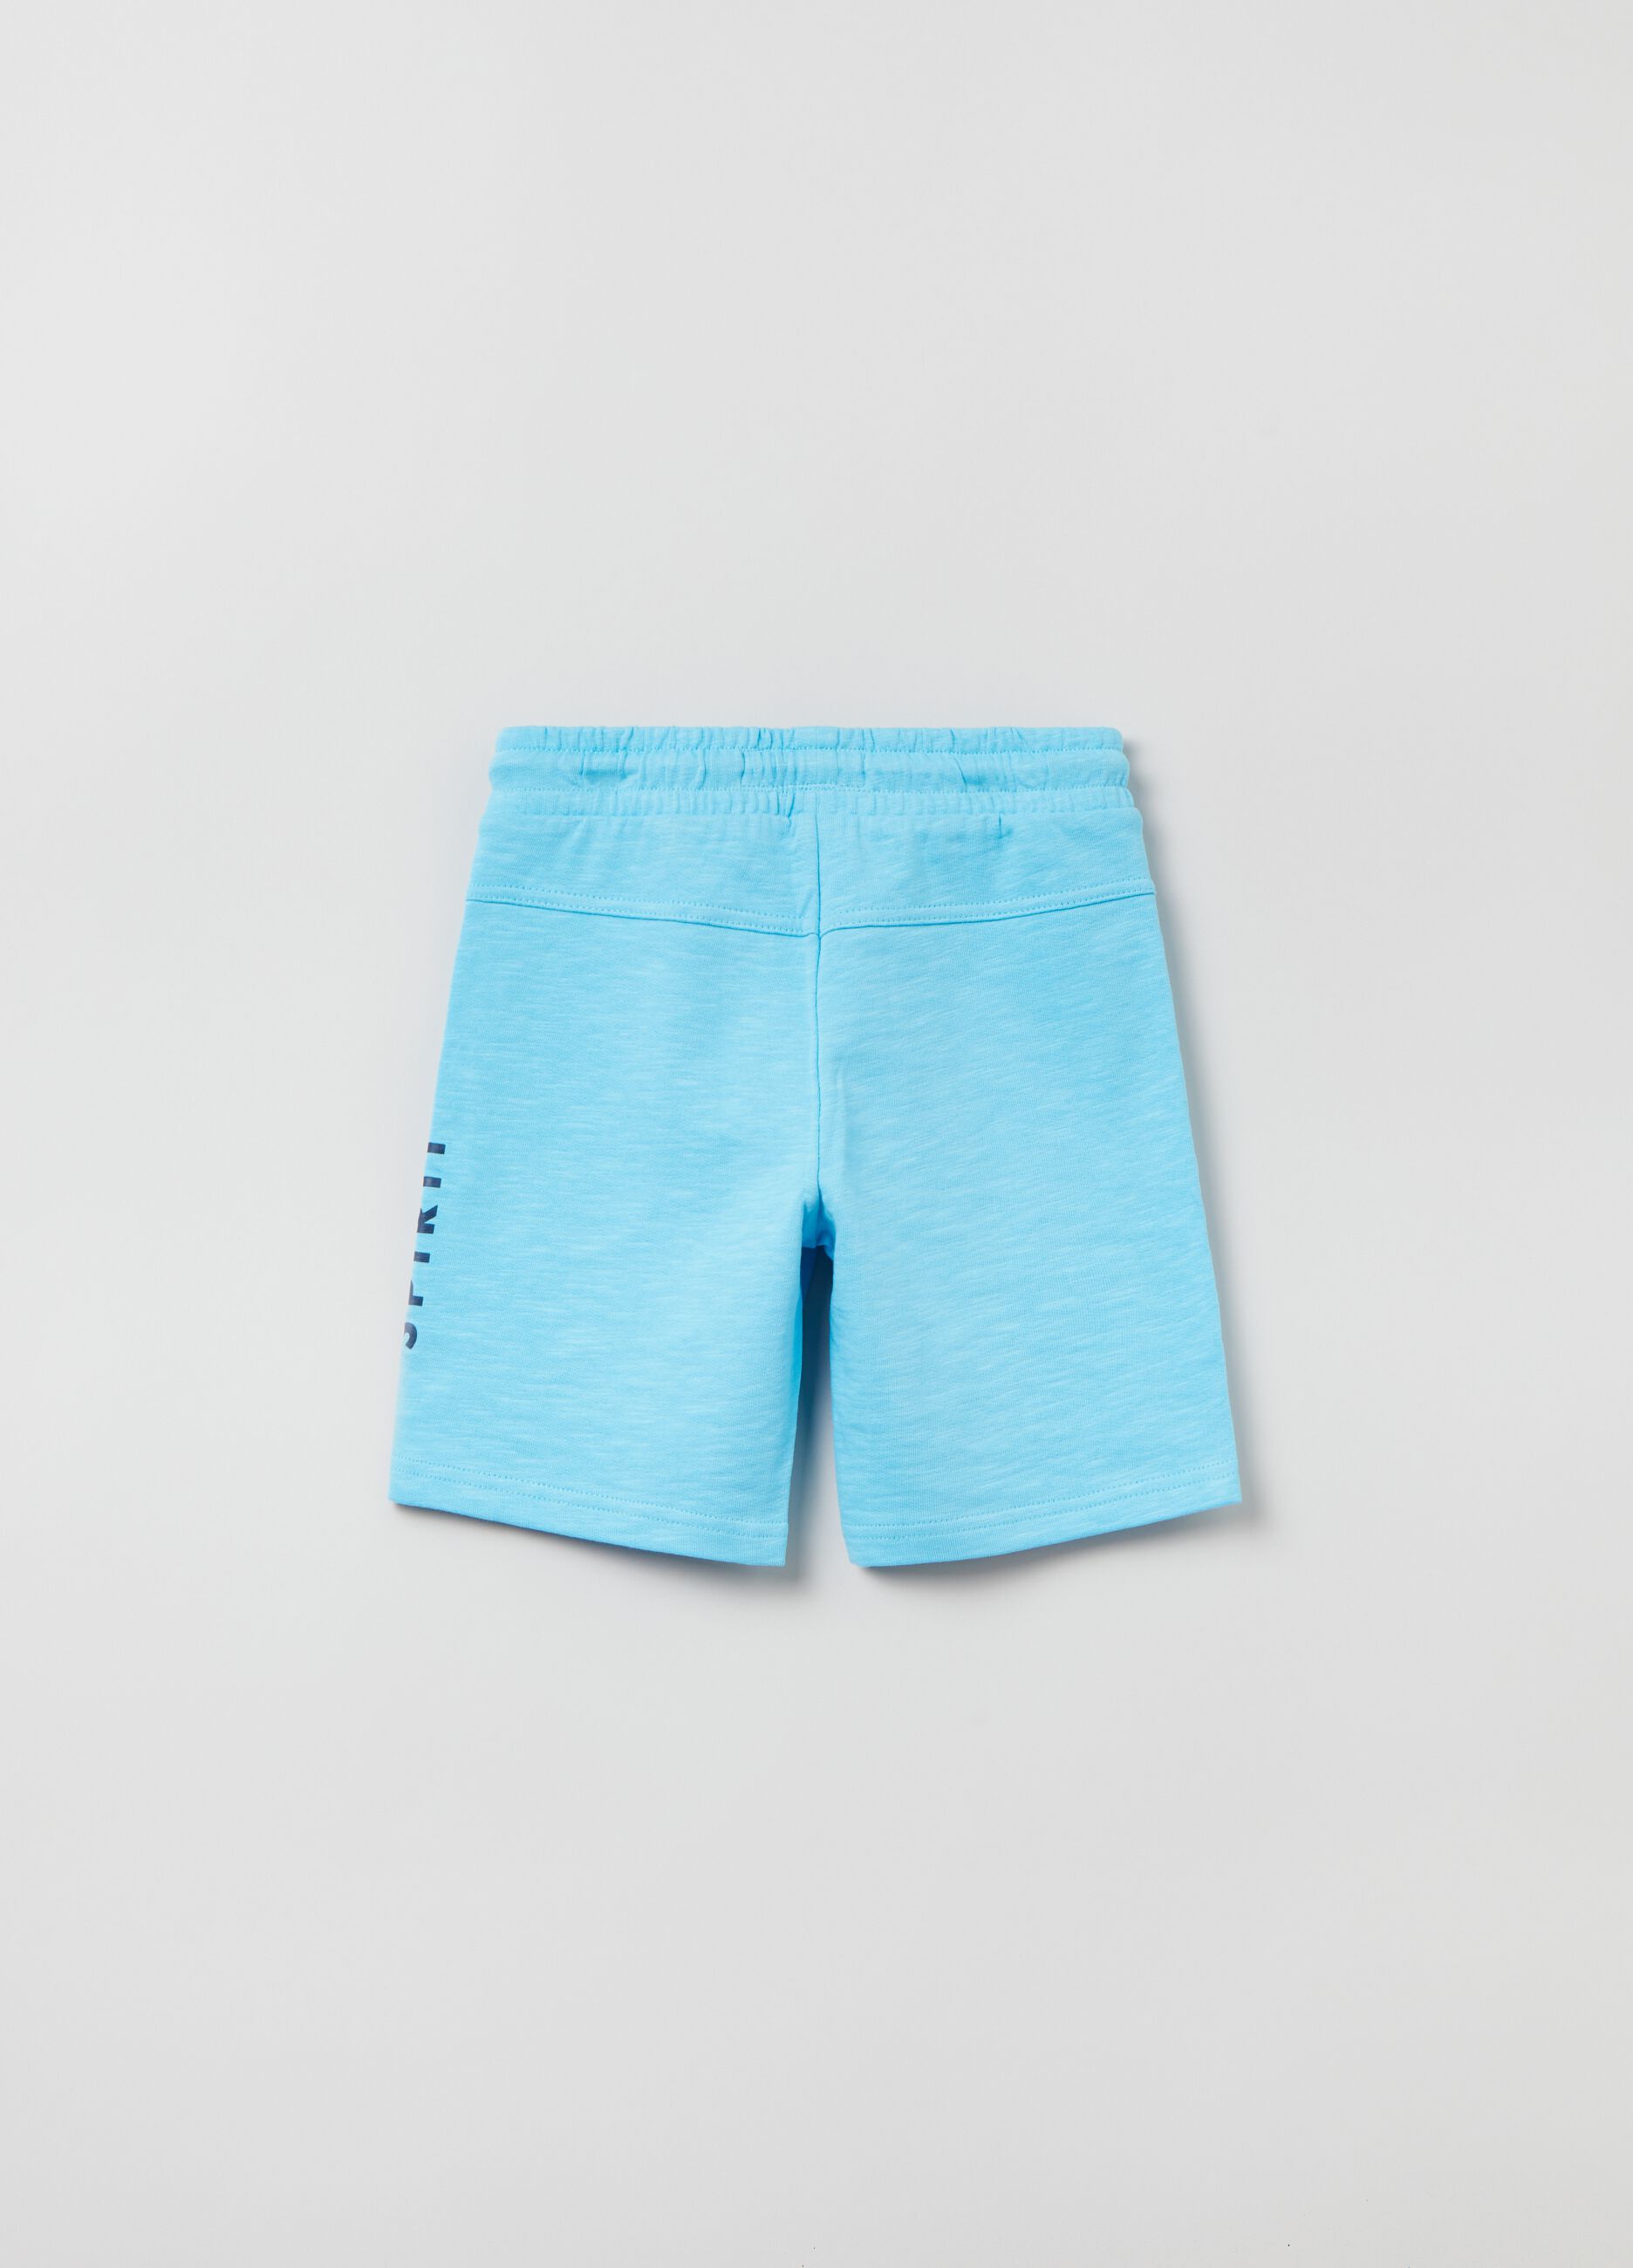 Cotton Bermuda shorts with Jeep print